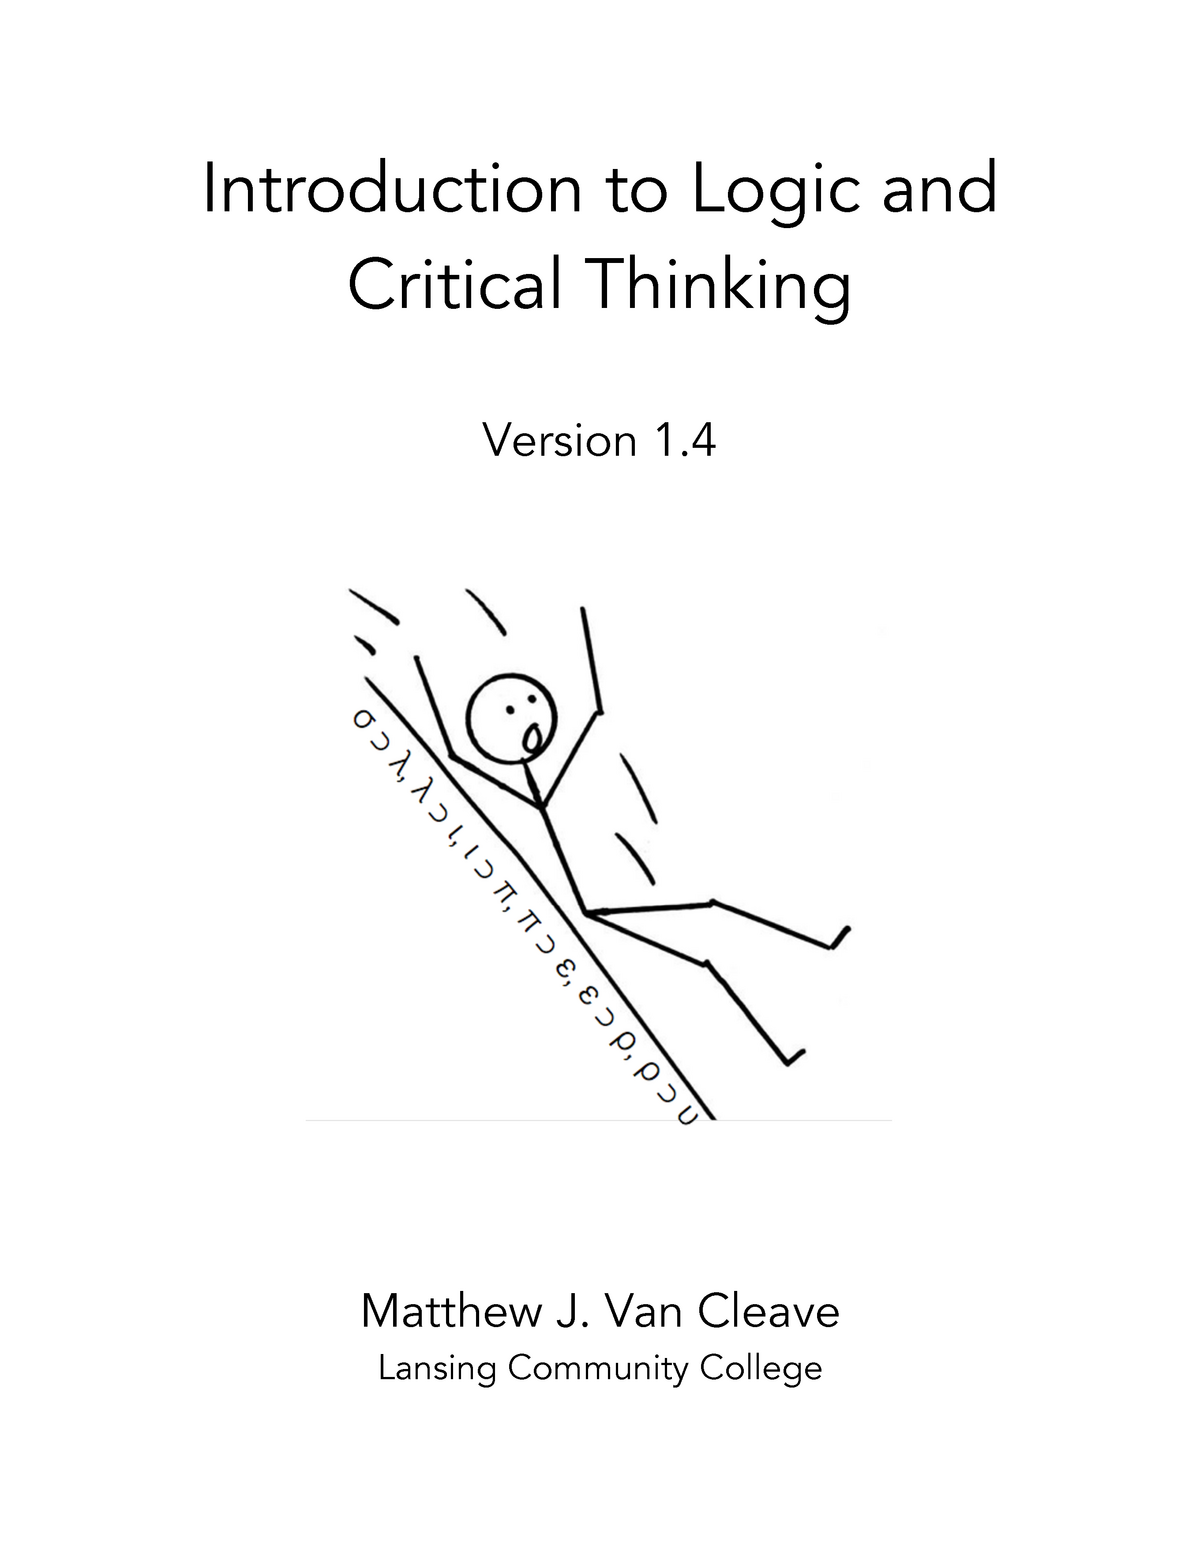 logic and critical thinking exam pdf